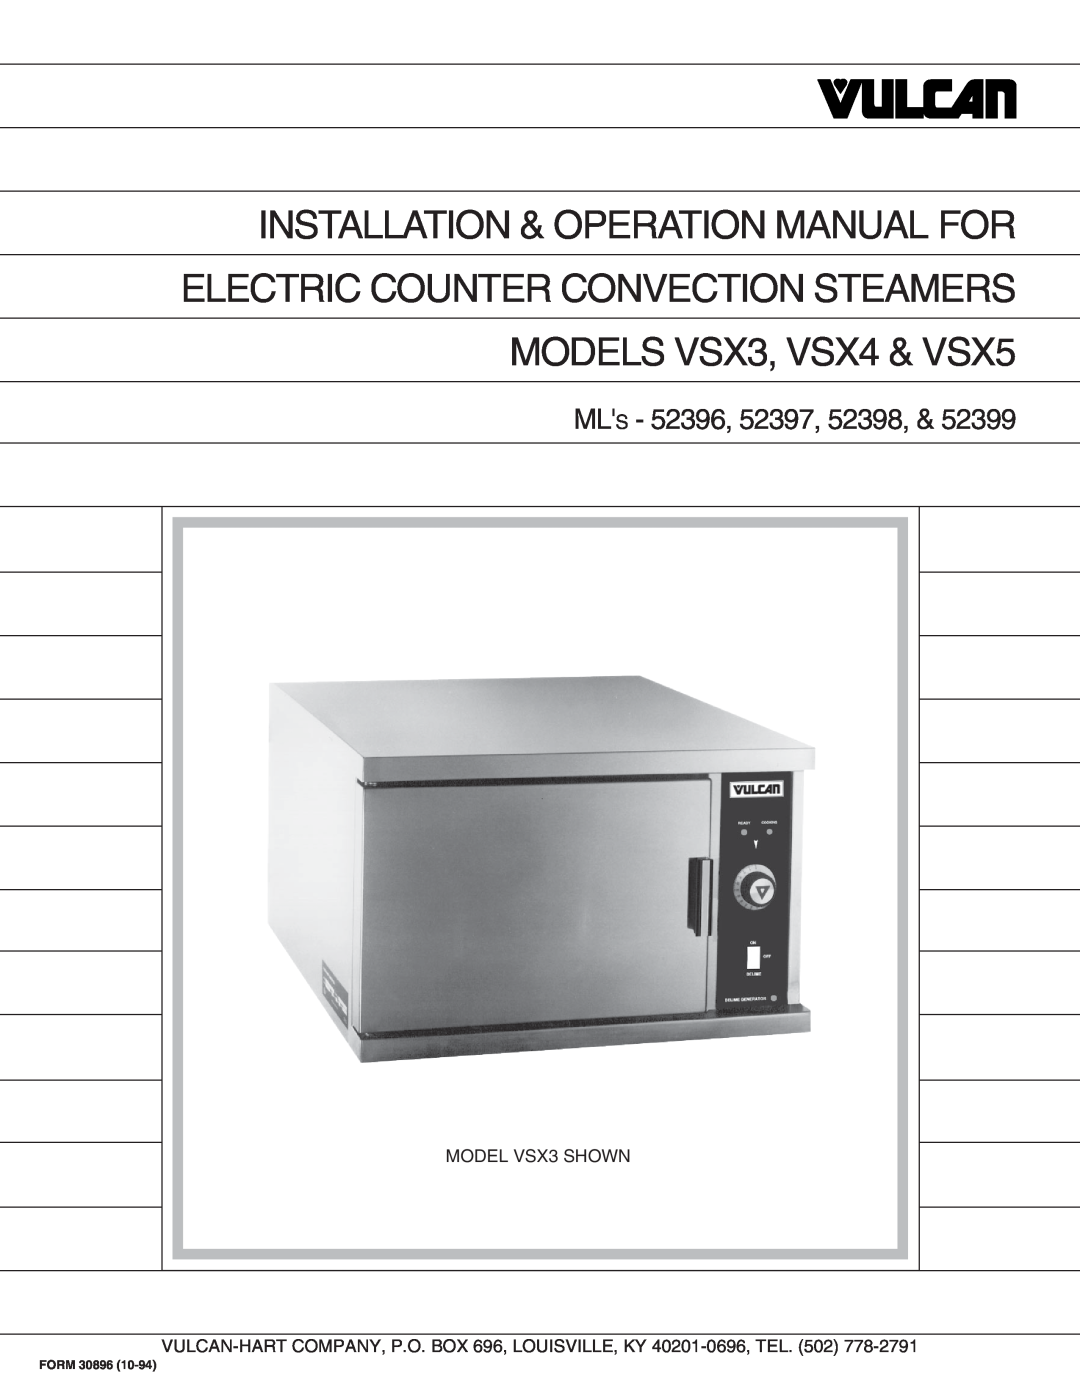 Vulcan-Hart 52398, 52399, 52397 operation manual Electric Counter Convection Steamers, MODELS VSX3, VSX4 & VSX5, Mls 